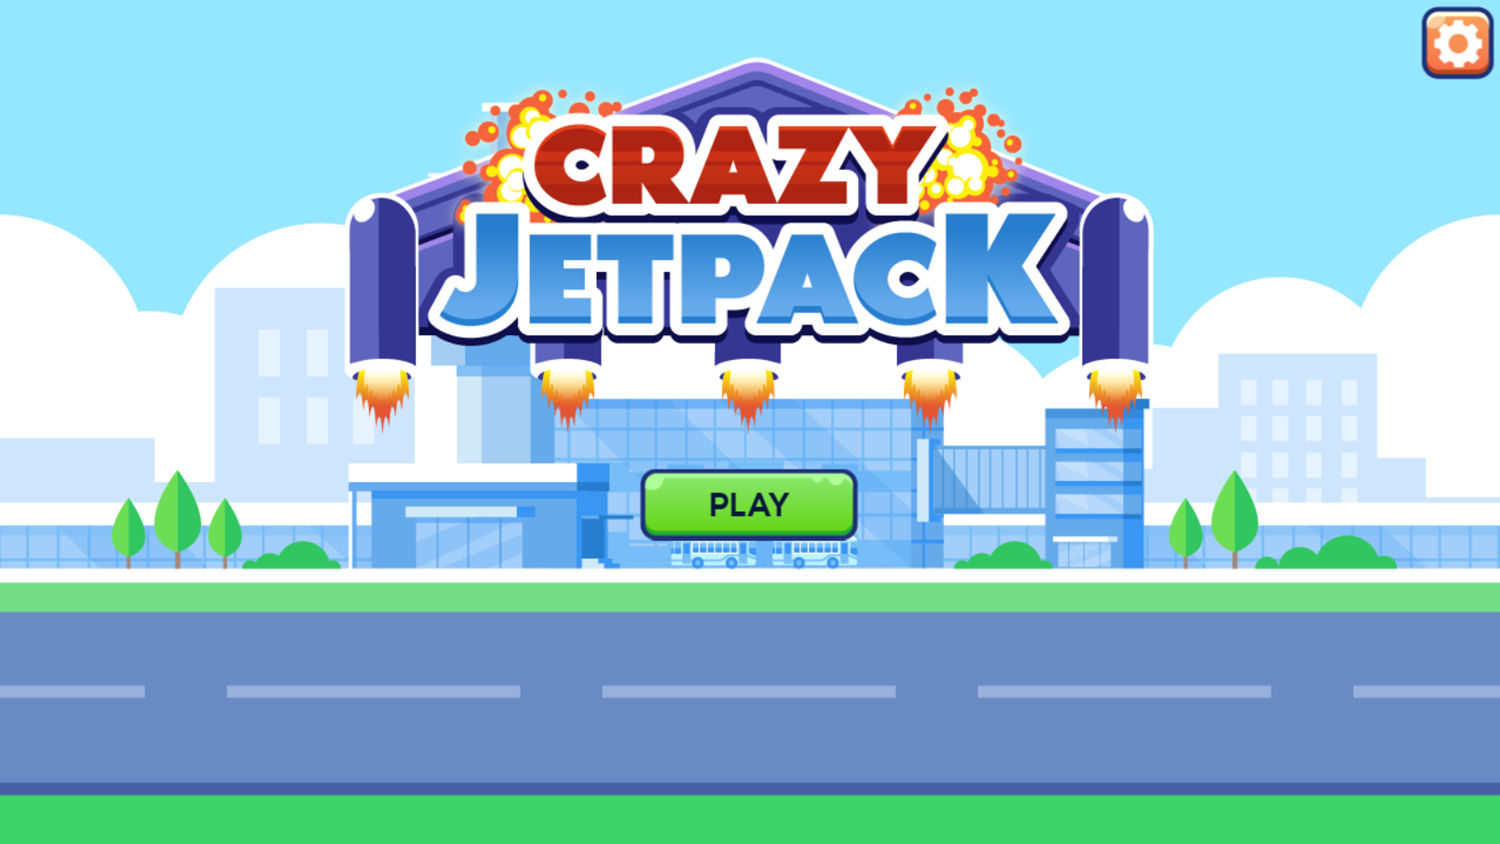 Crazy Jetpack Game Welcome Screen Screenshot.